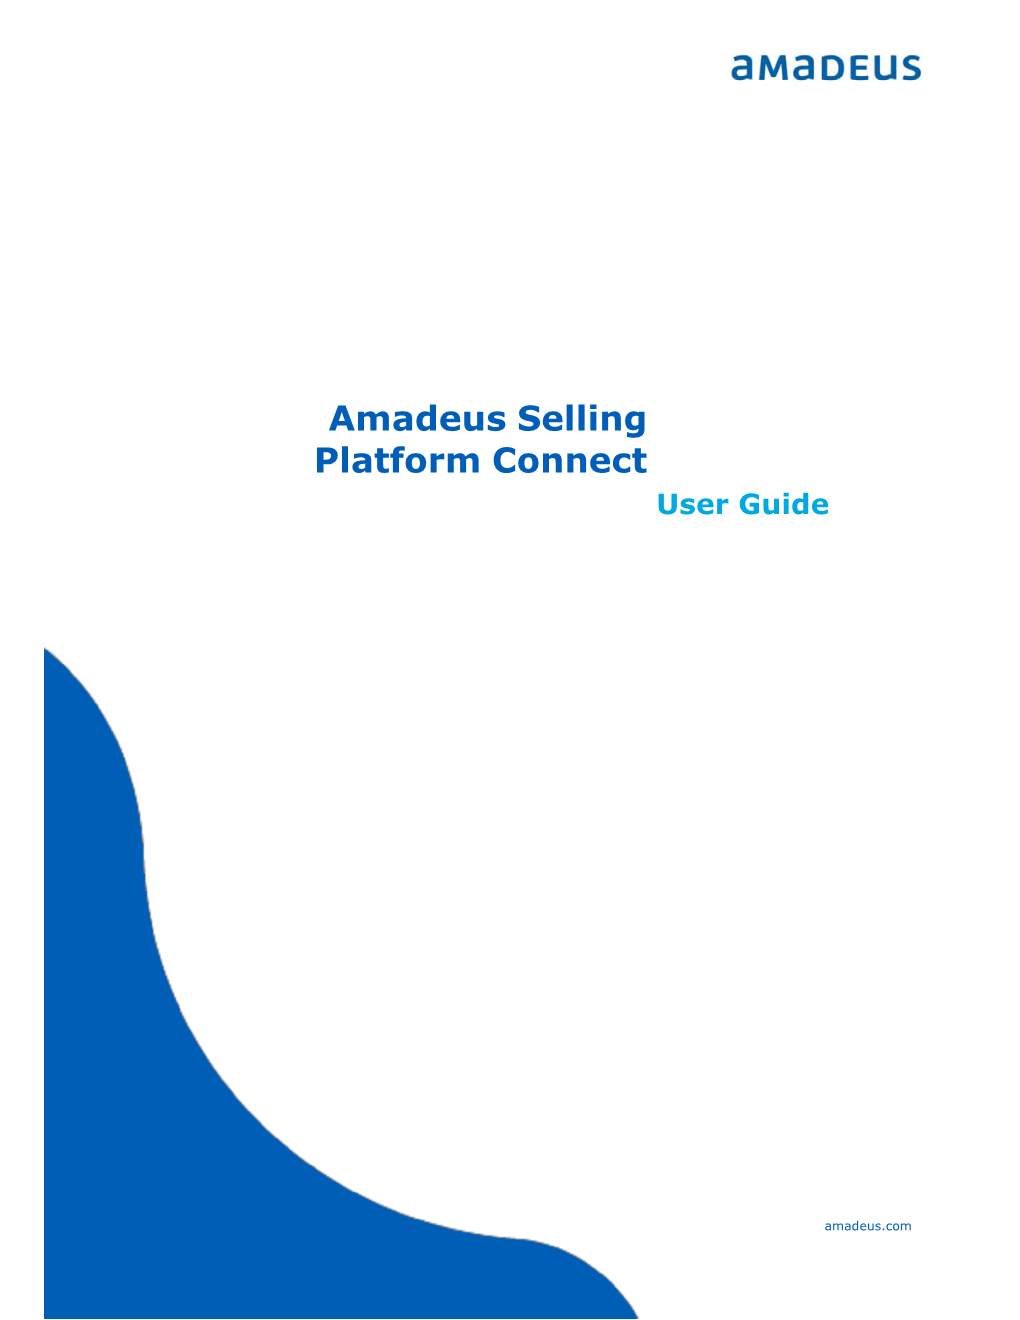 Amadeus Selling Platform Connect 21.1 Job Number 4449 FE 0714